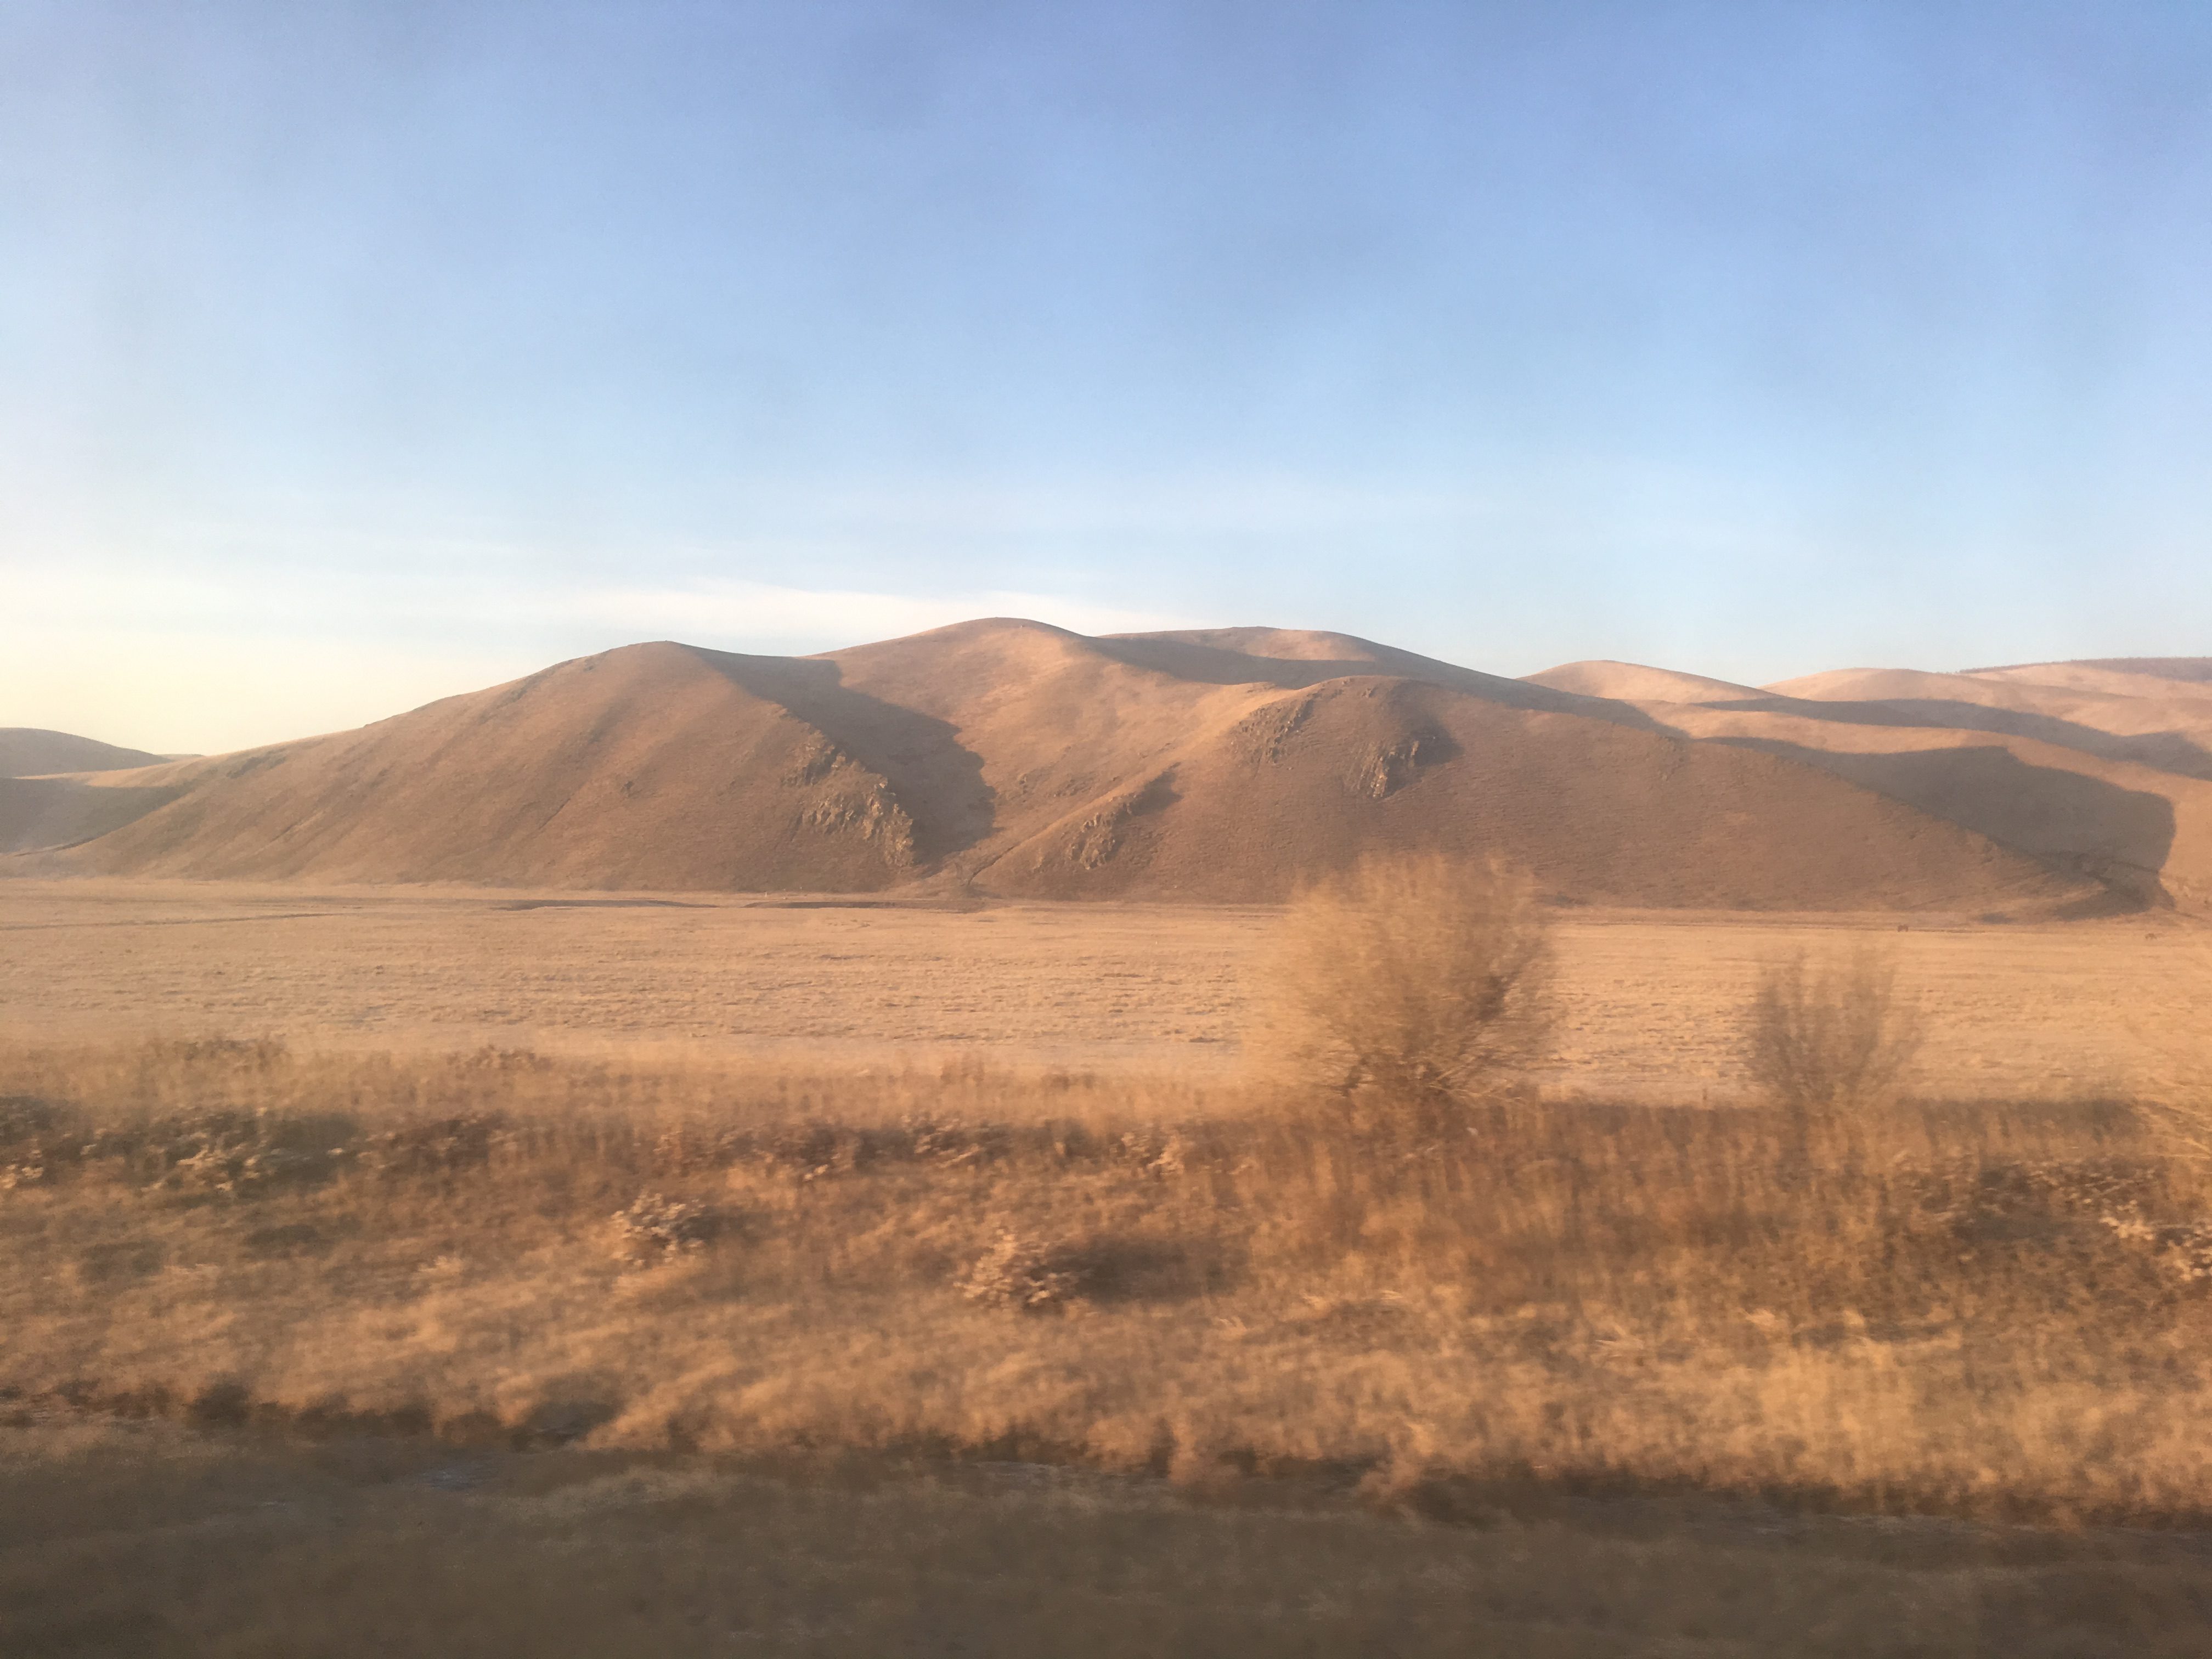 Mongolian hills take on the shape of sand dunes